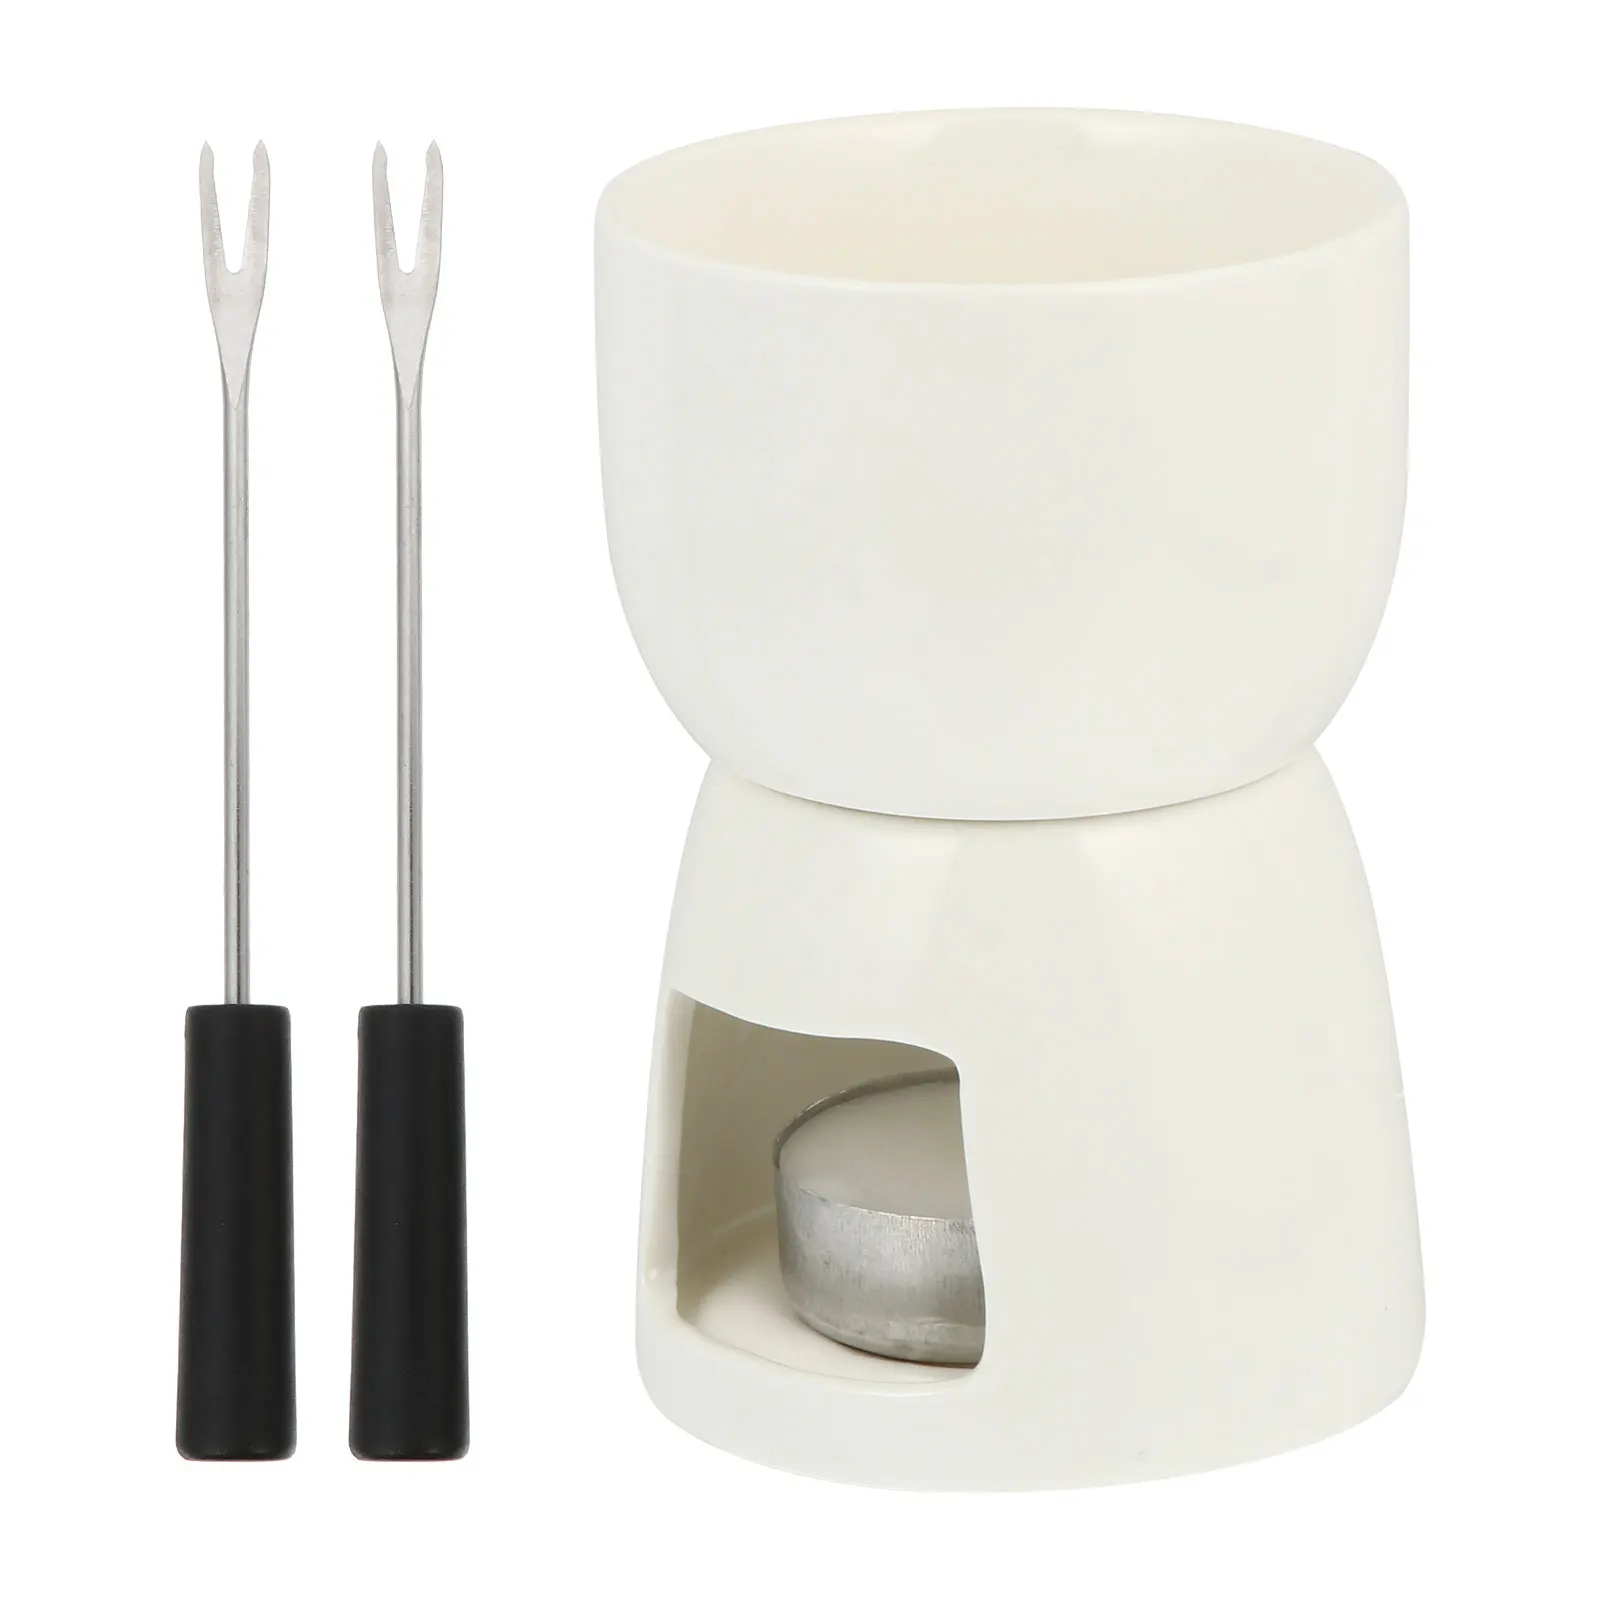 1 Set Ceramic Fondue With 2 Forks Premium Tea Light Porcelain Melting Pot Chocolate Cheese Melting Oven Baking diy hot pot